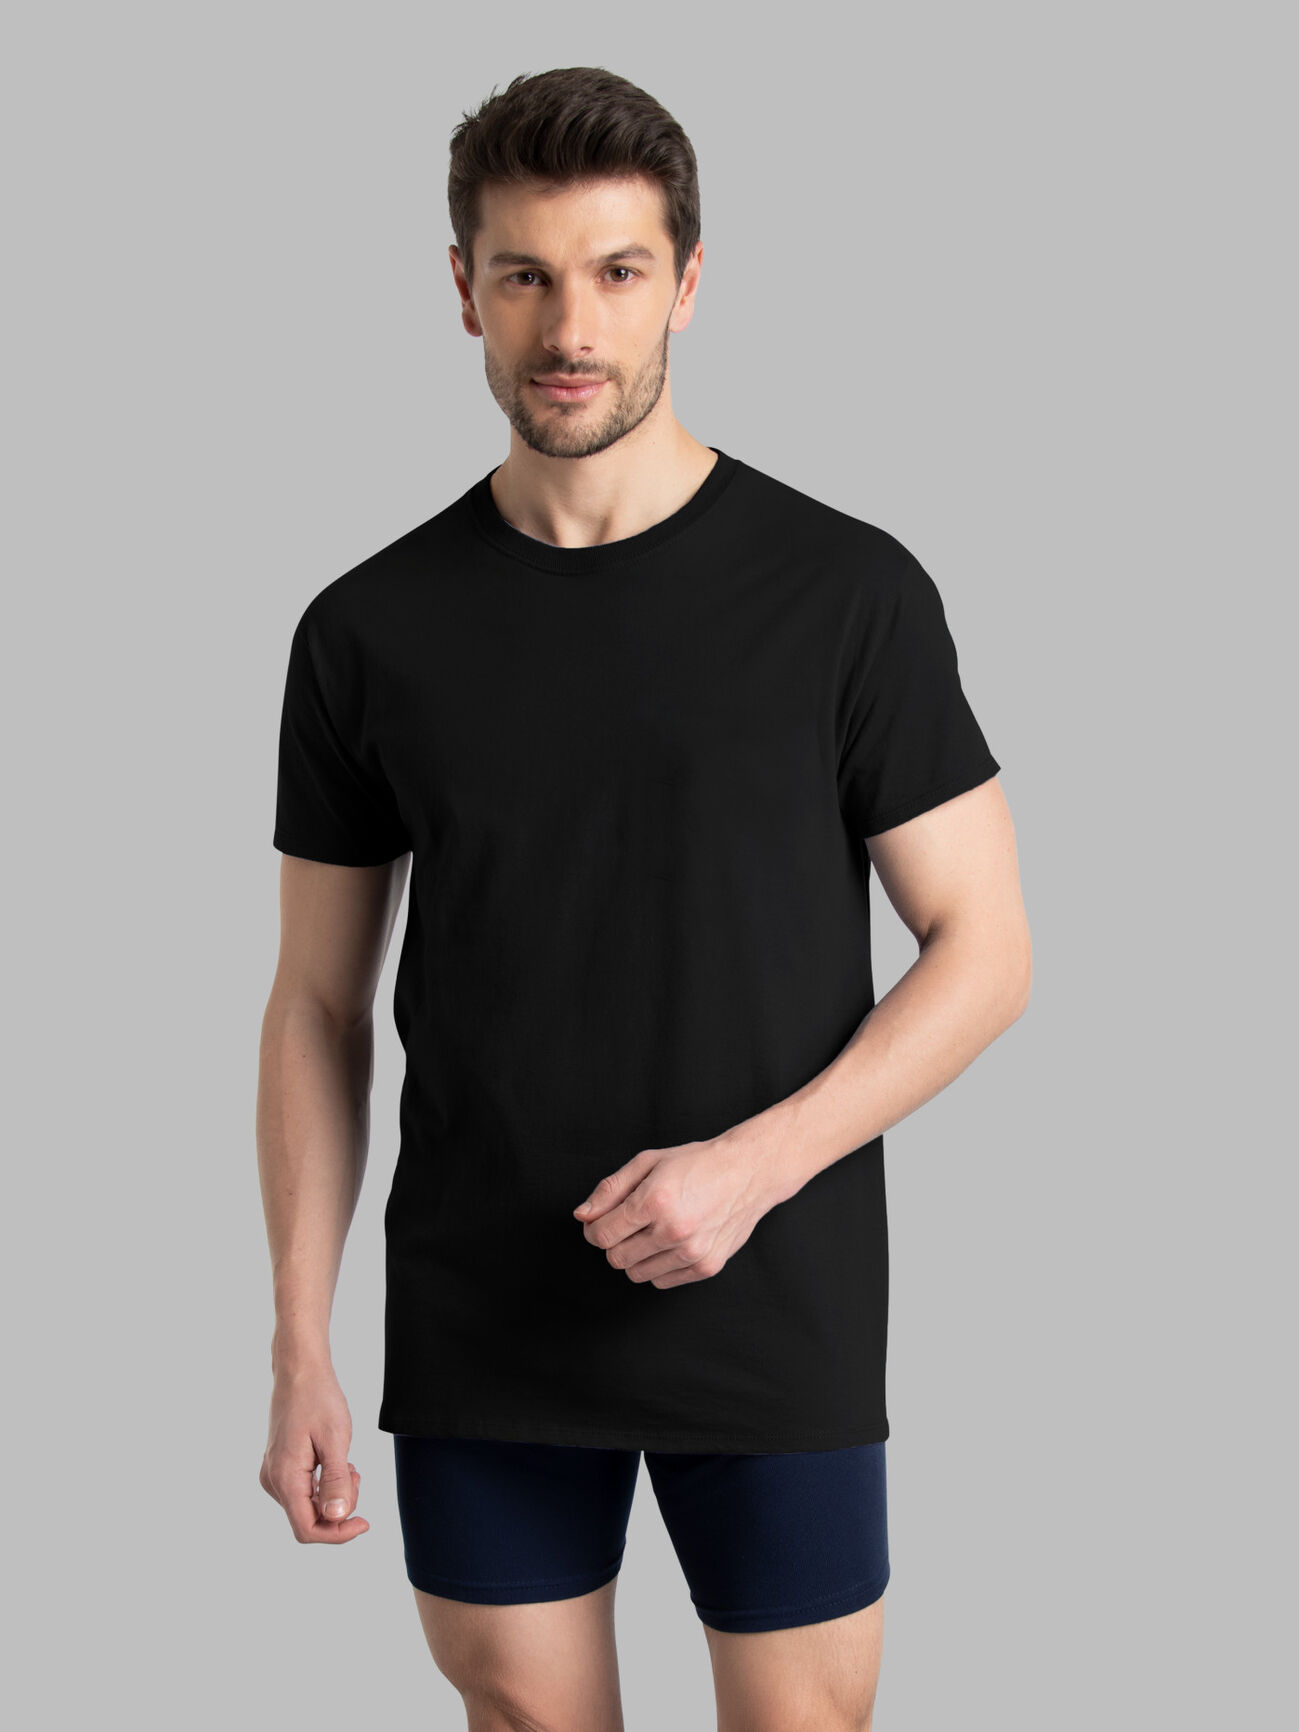 Men's Long Sleeve Shirts Cotton Tees Crew Neck T-Shirt - Black / S